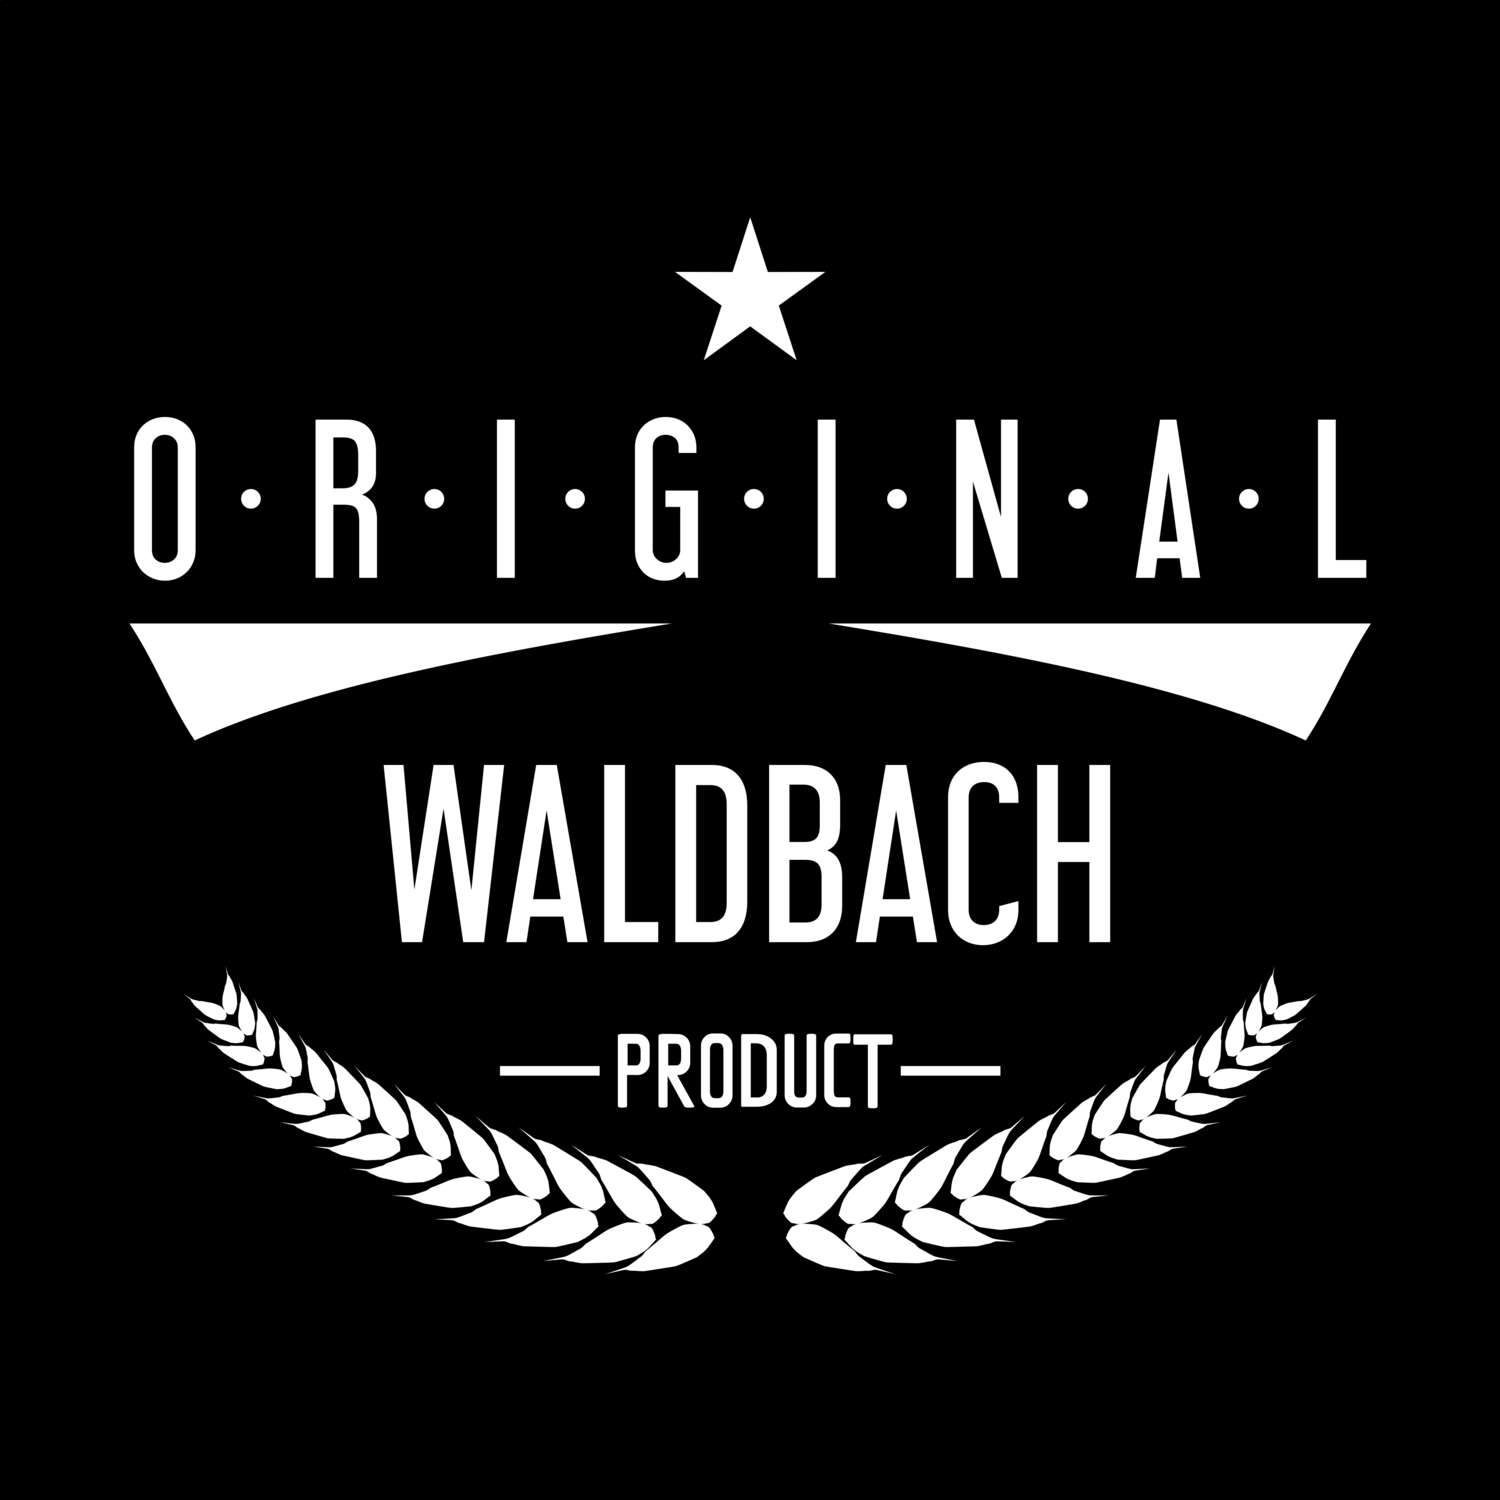 Waldbach T-Shirt »Original Product«